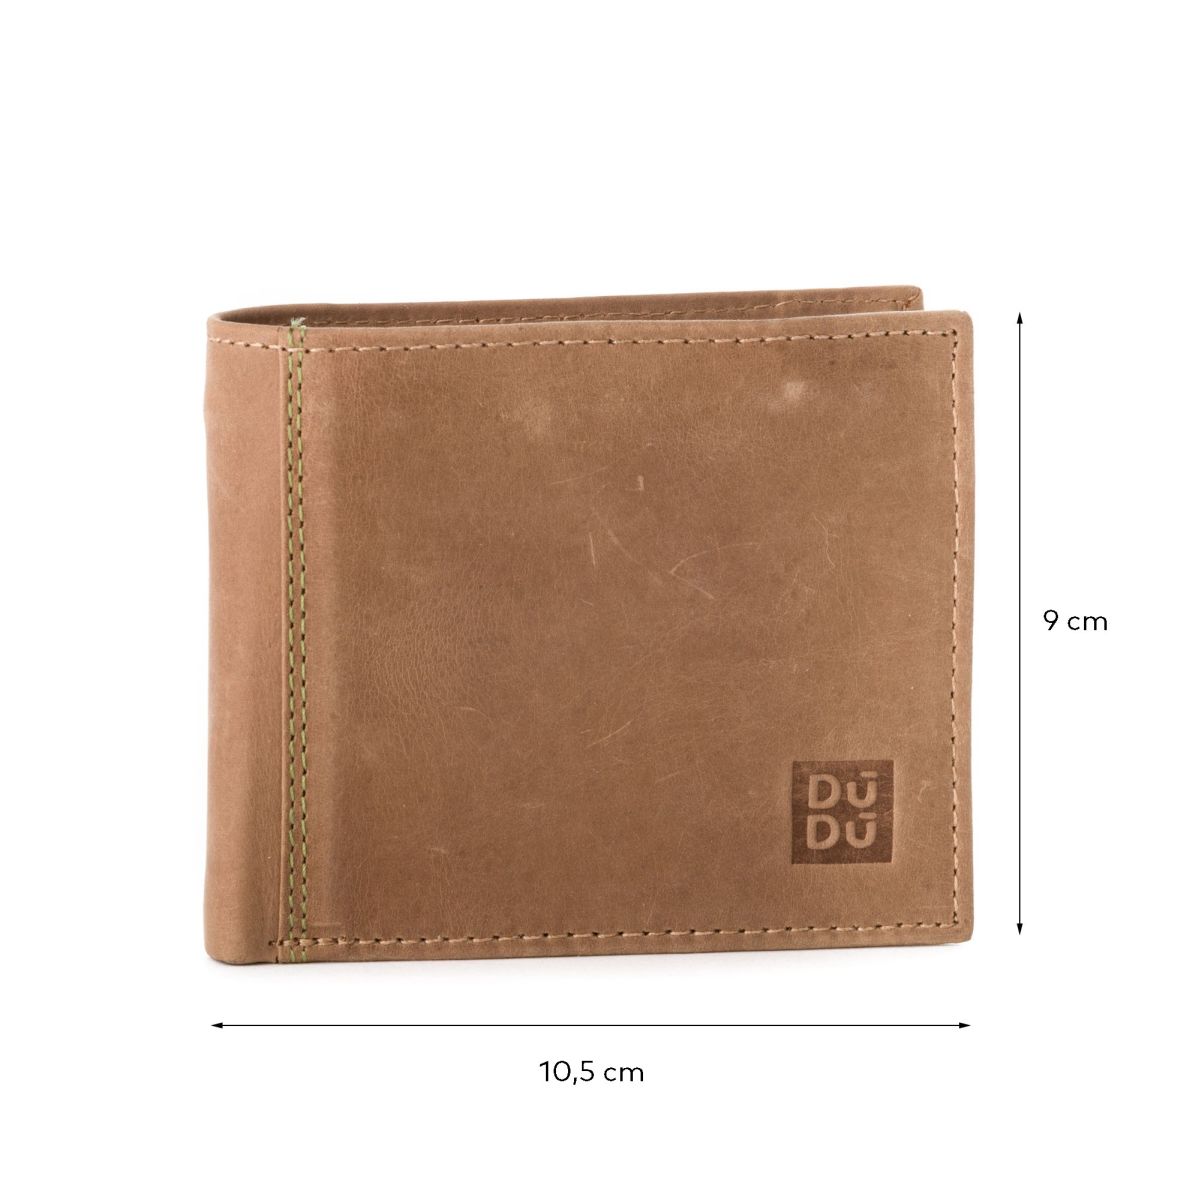 DuDu Mans vintage leather wallet - Tan